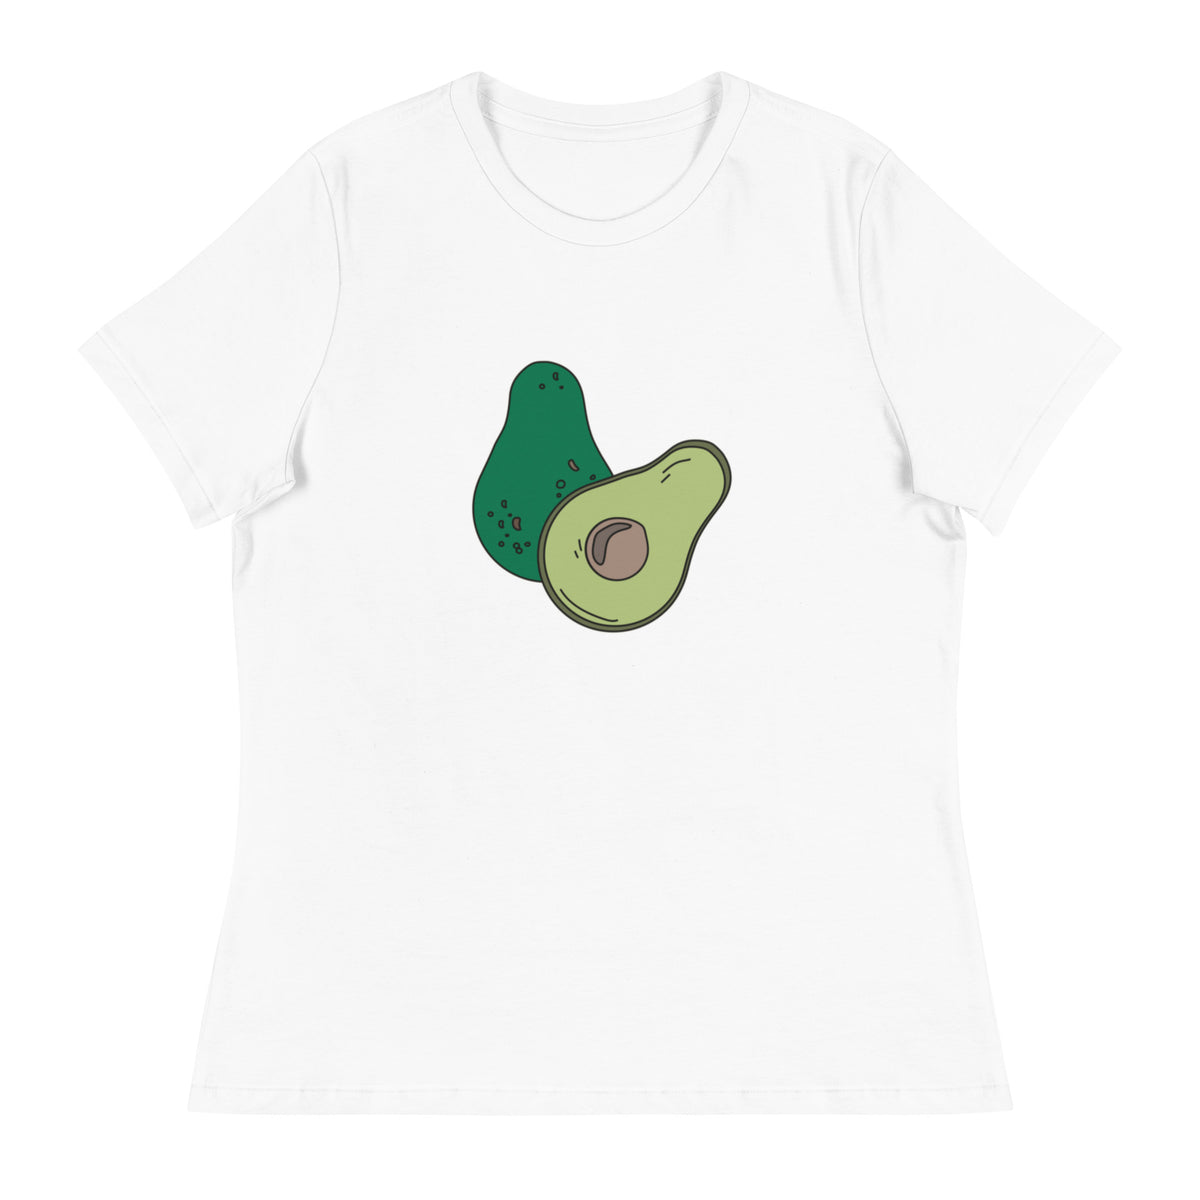 Avocado Slice T-Shirt